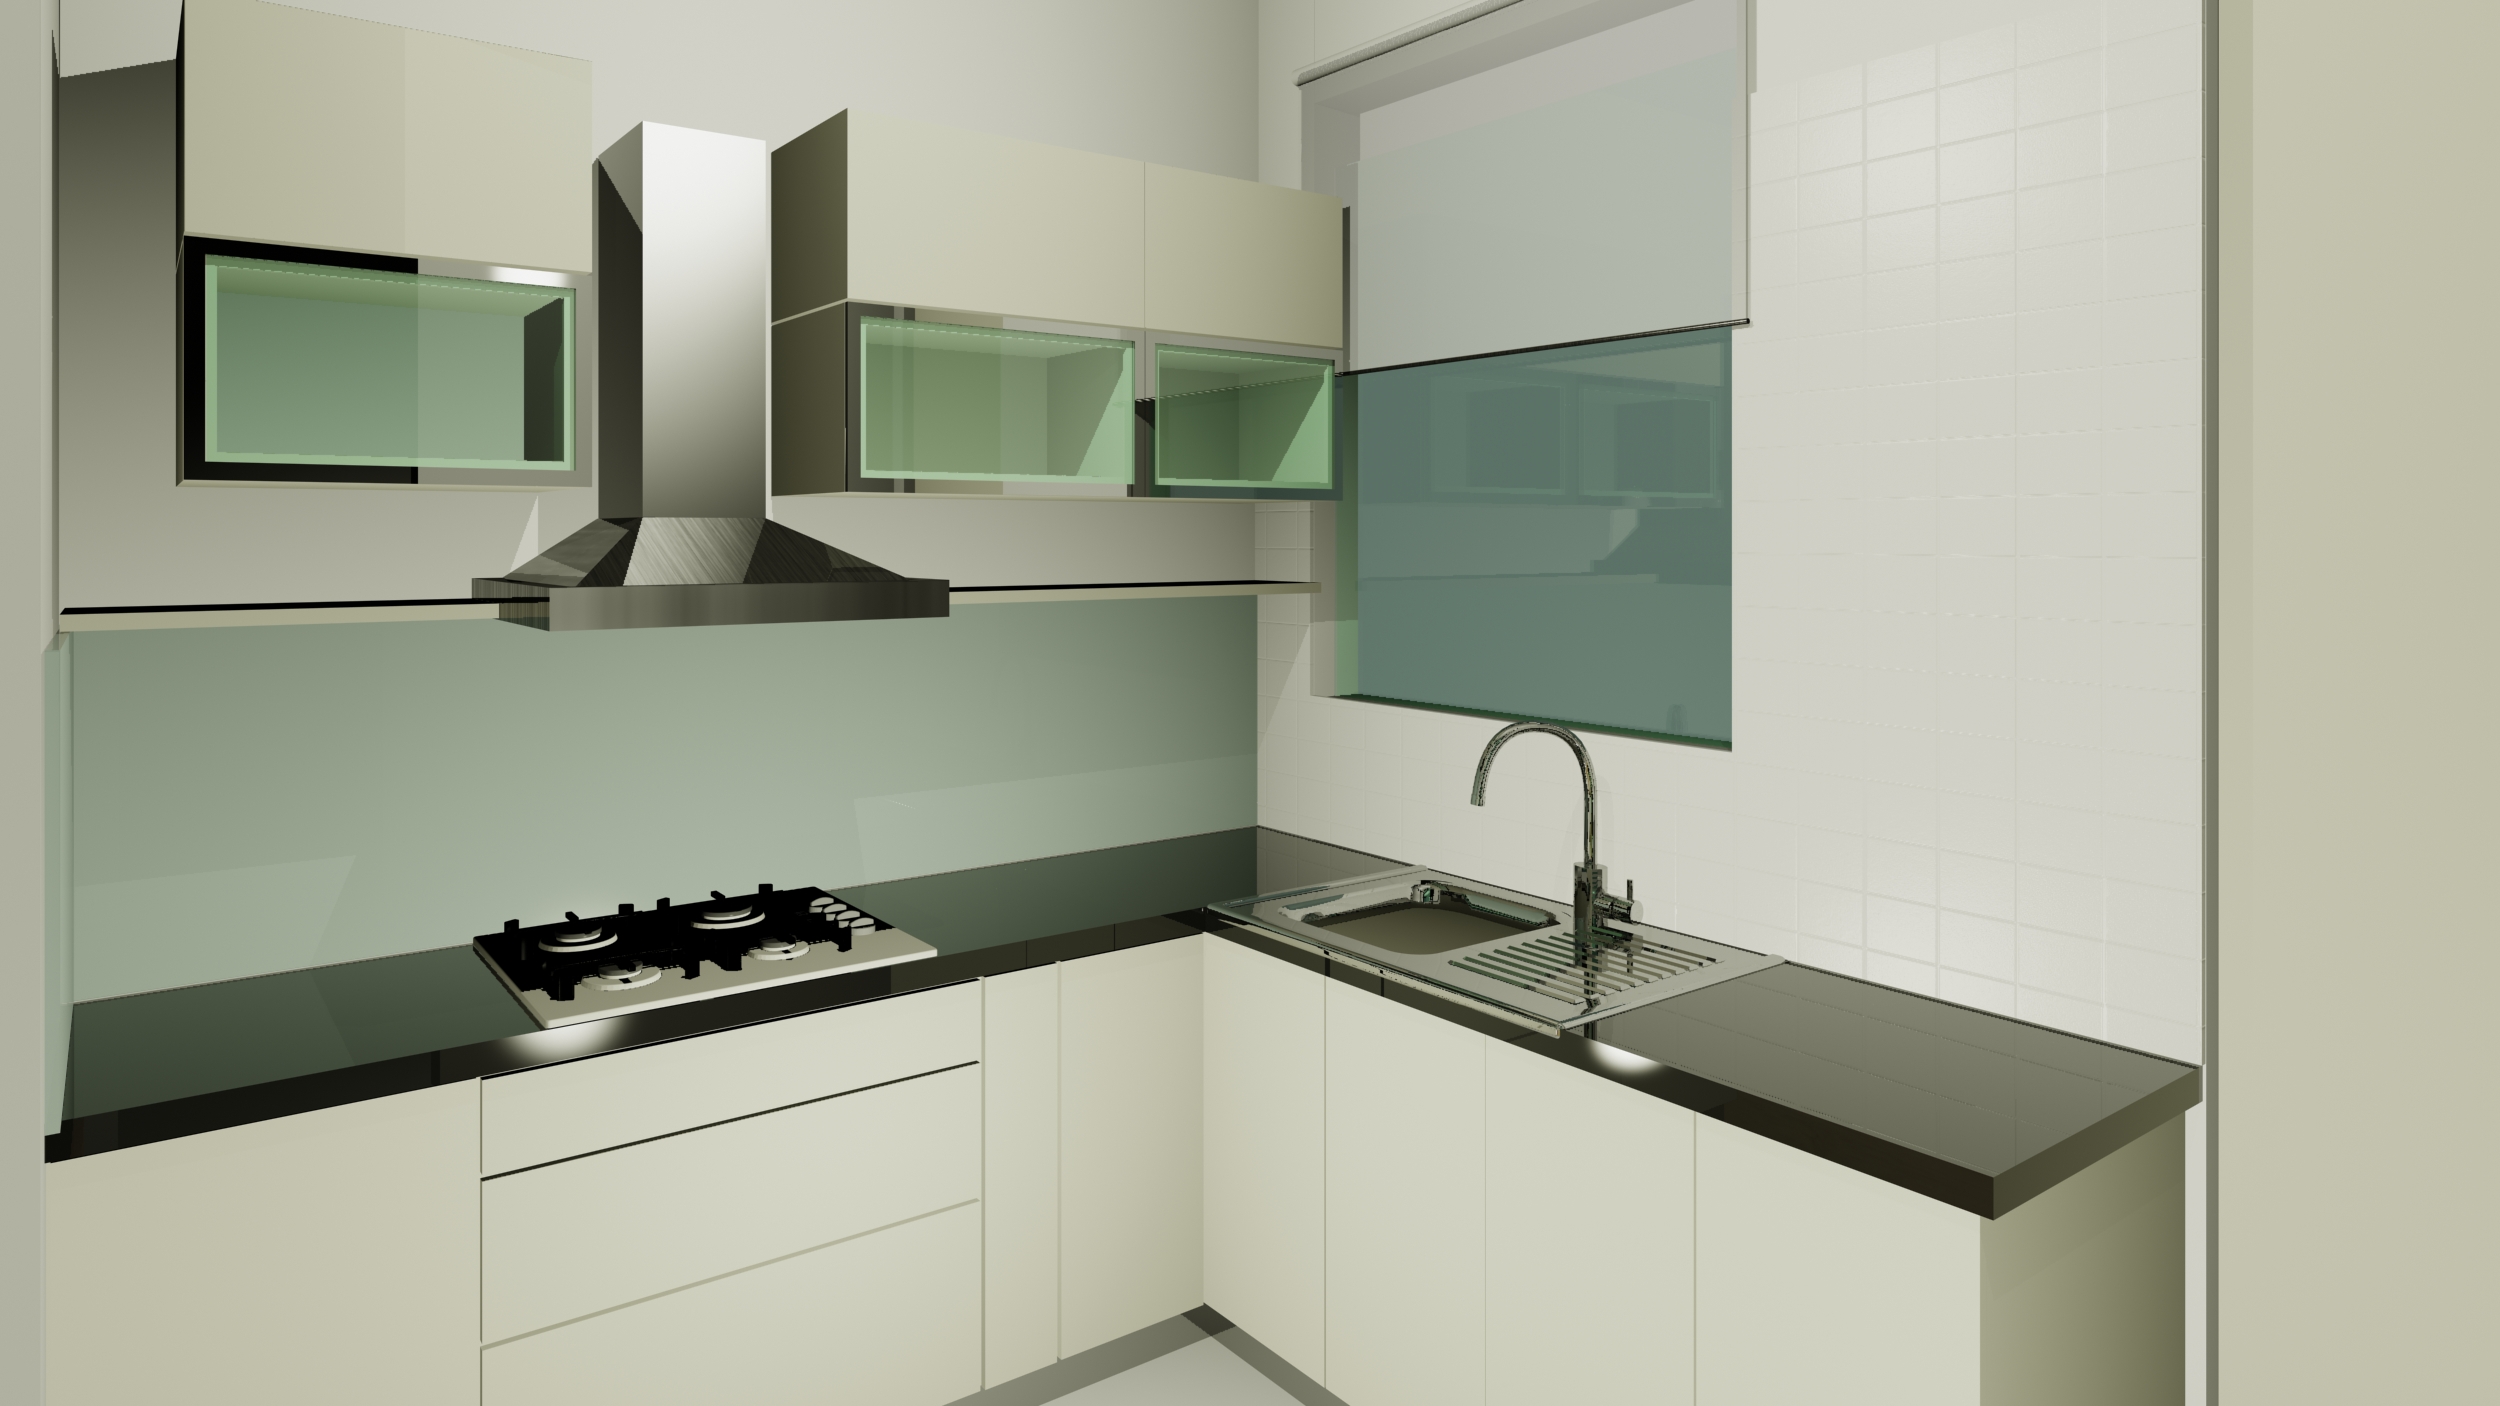 Wet Kitchen Design Small Space Malaysia - Rumah Terkini